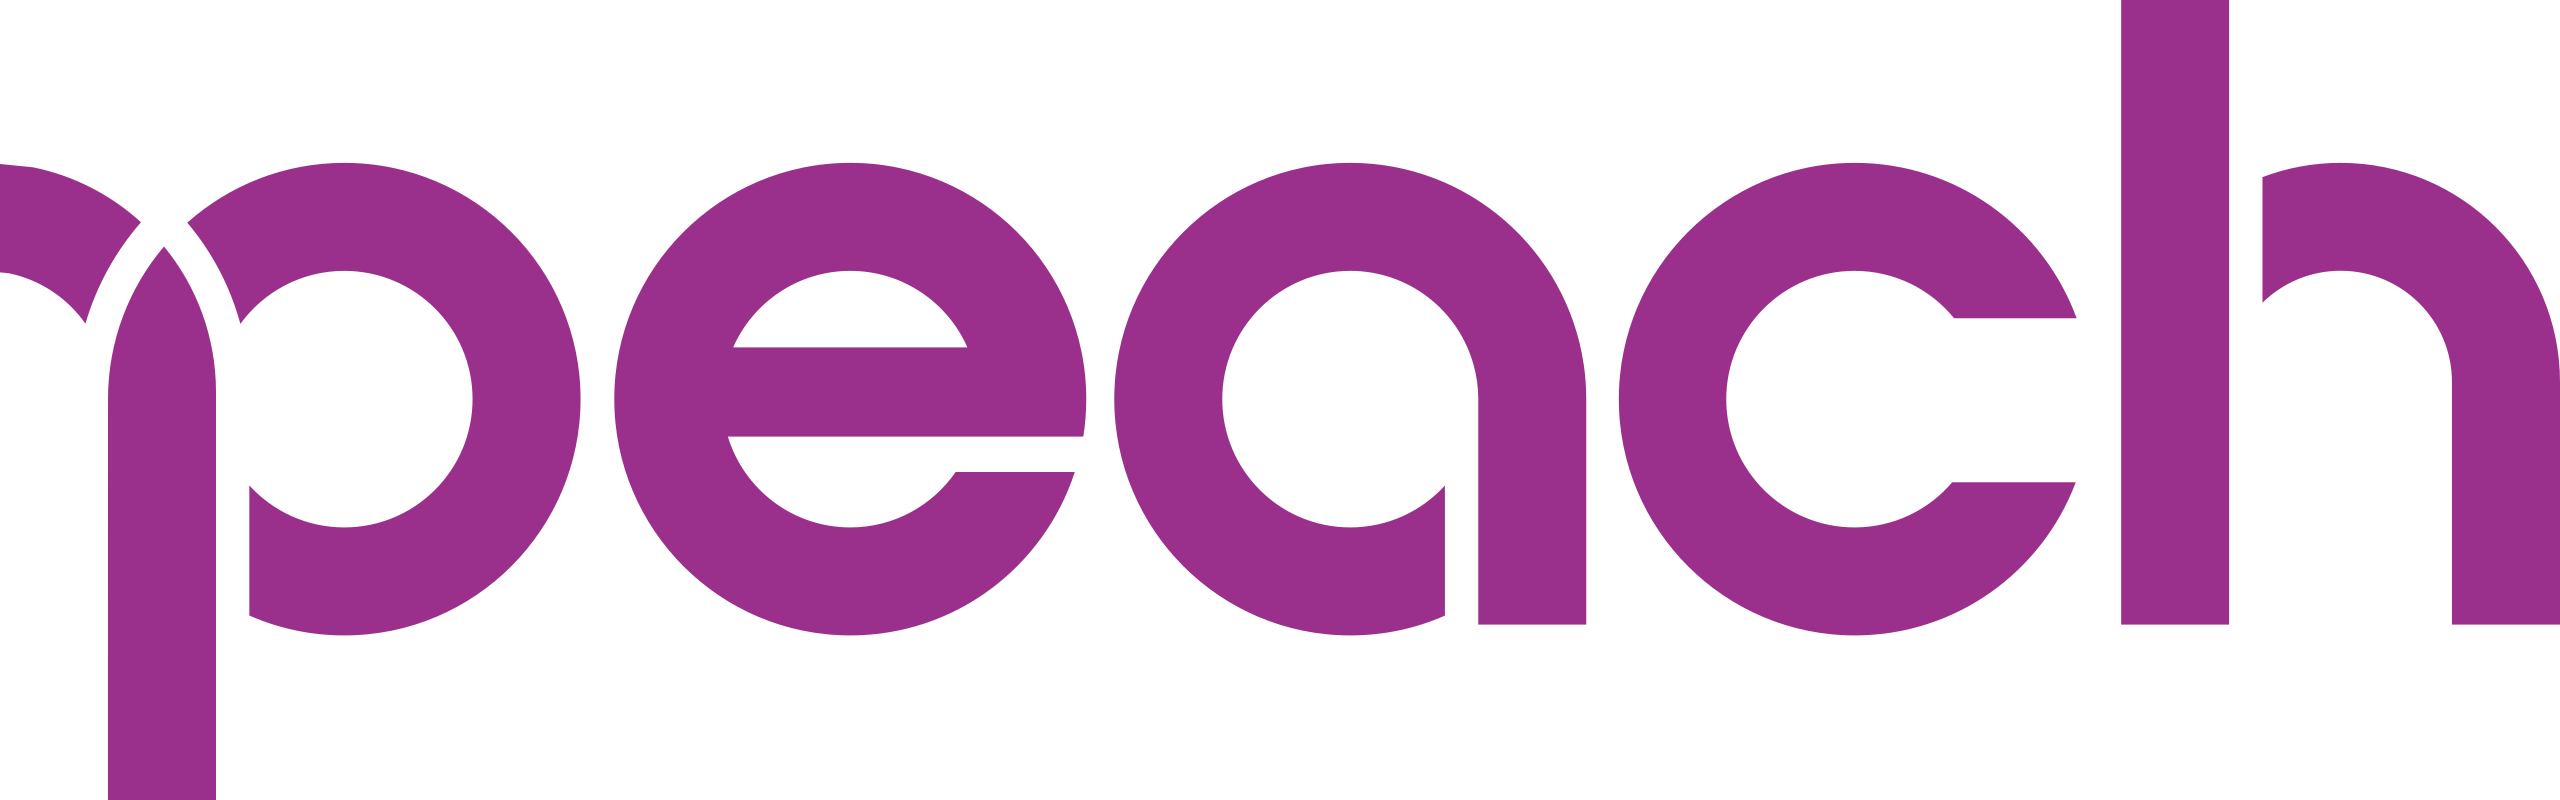 Peach_Aviation_Logo.svg